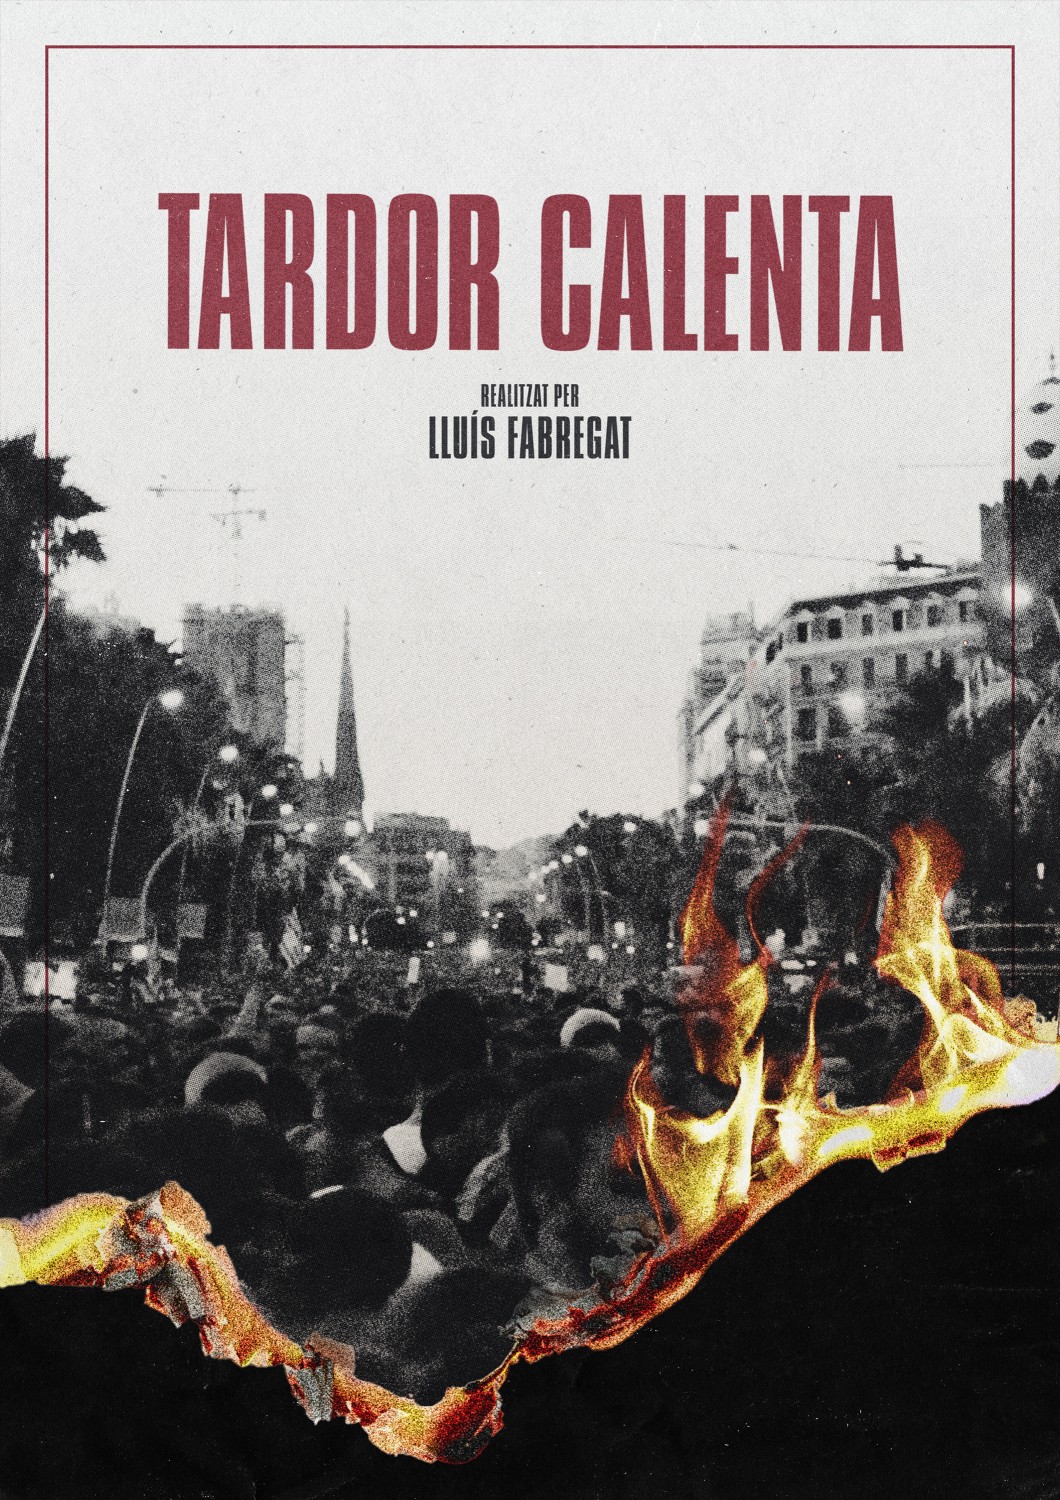 Extra Large Movie Poster Image for Tardor Calenta